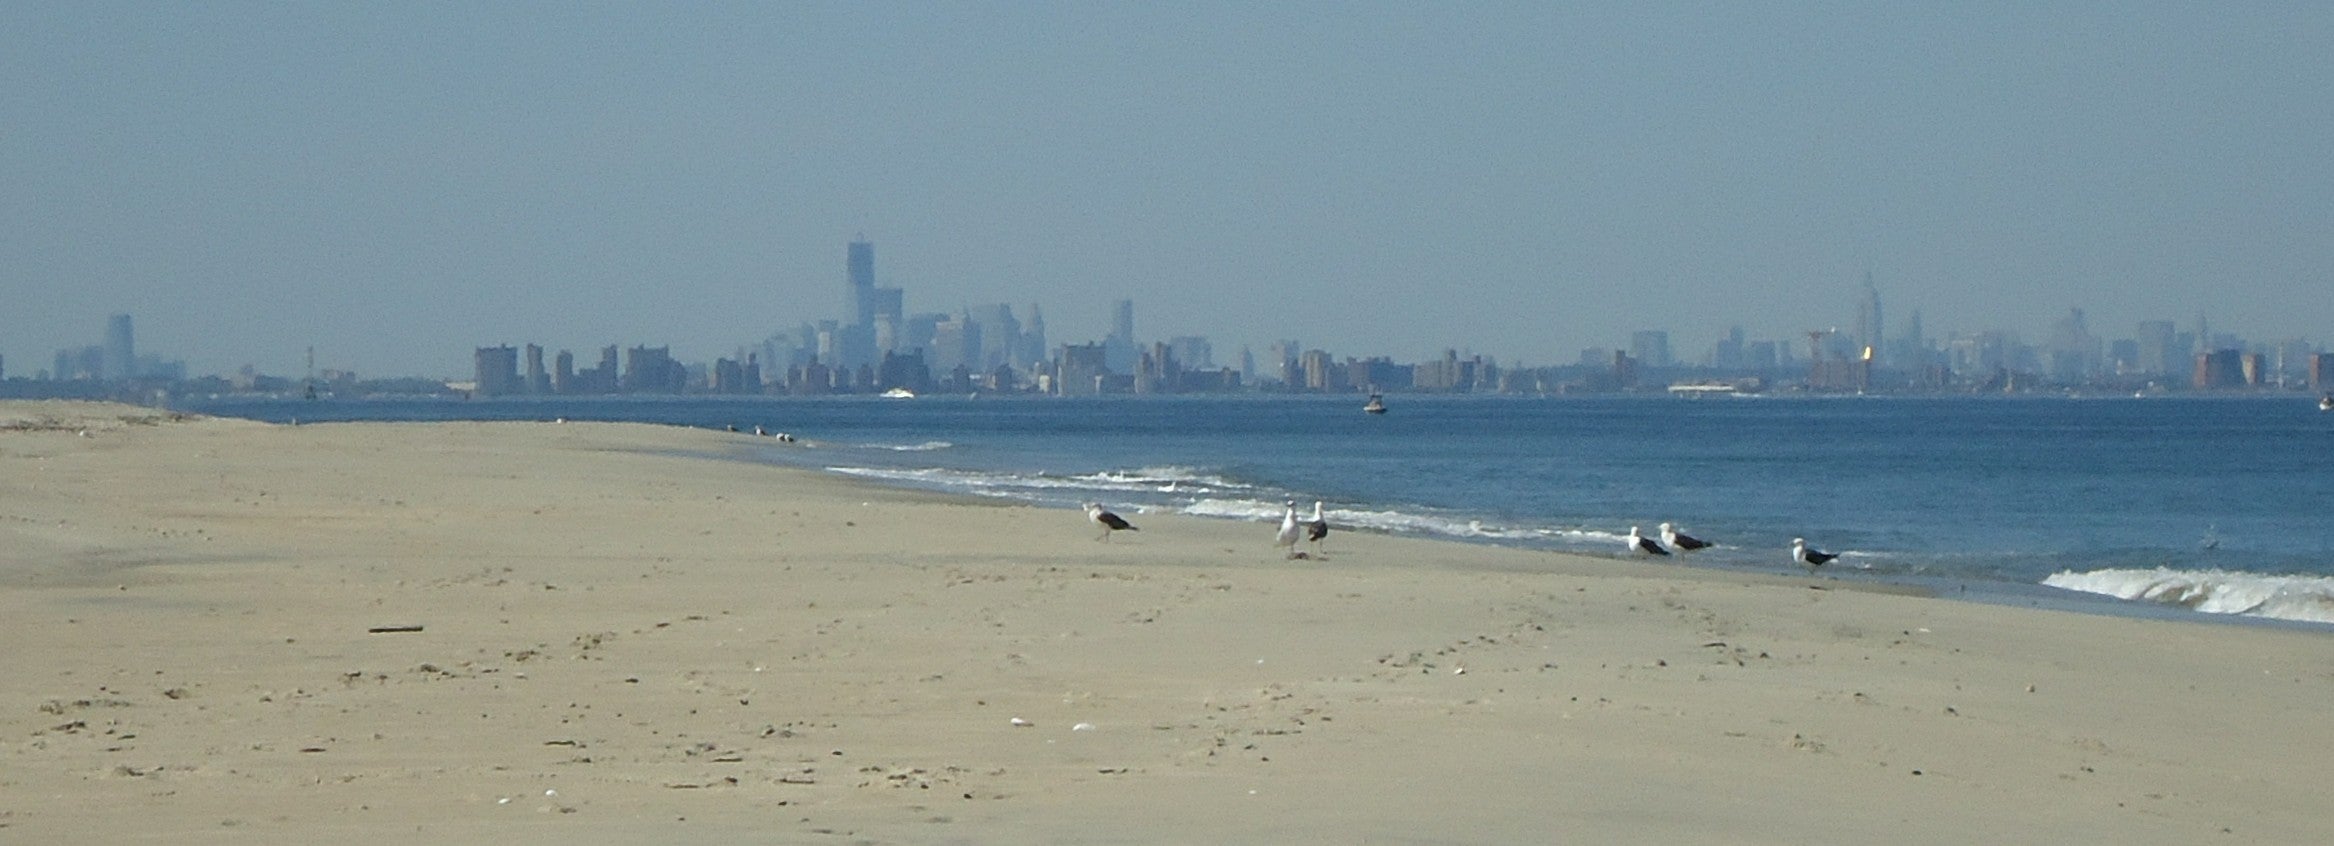  Sandy Hook. (Image: wikipedia.org) 